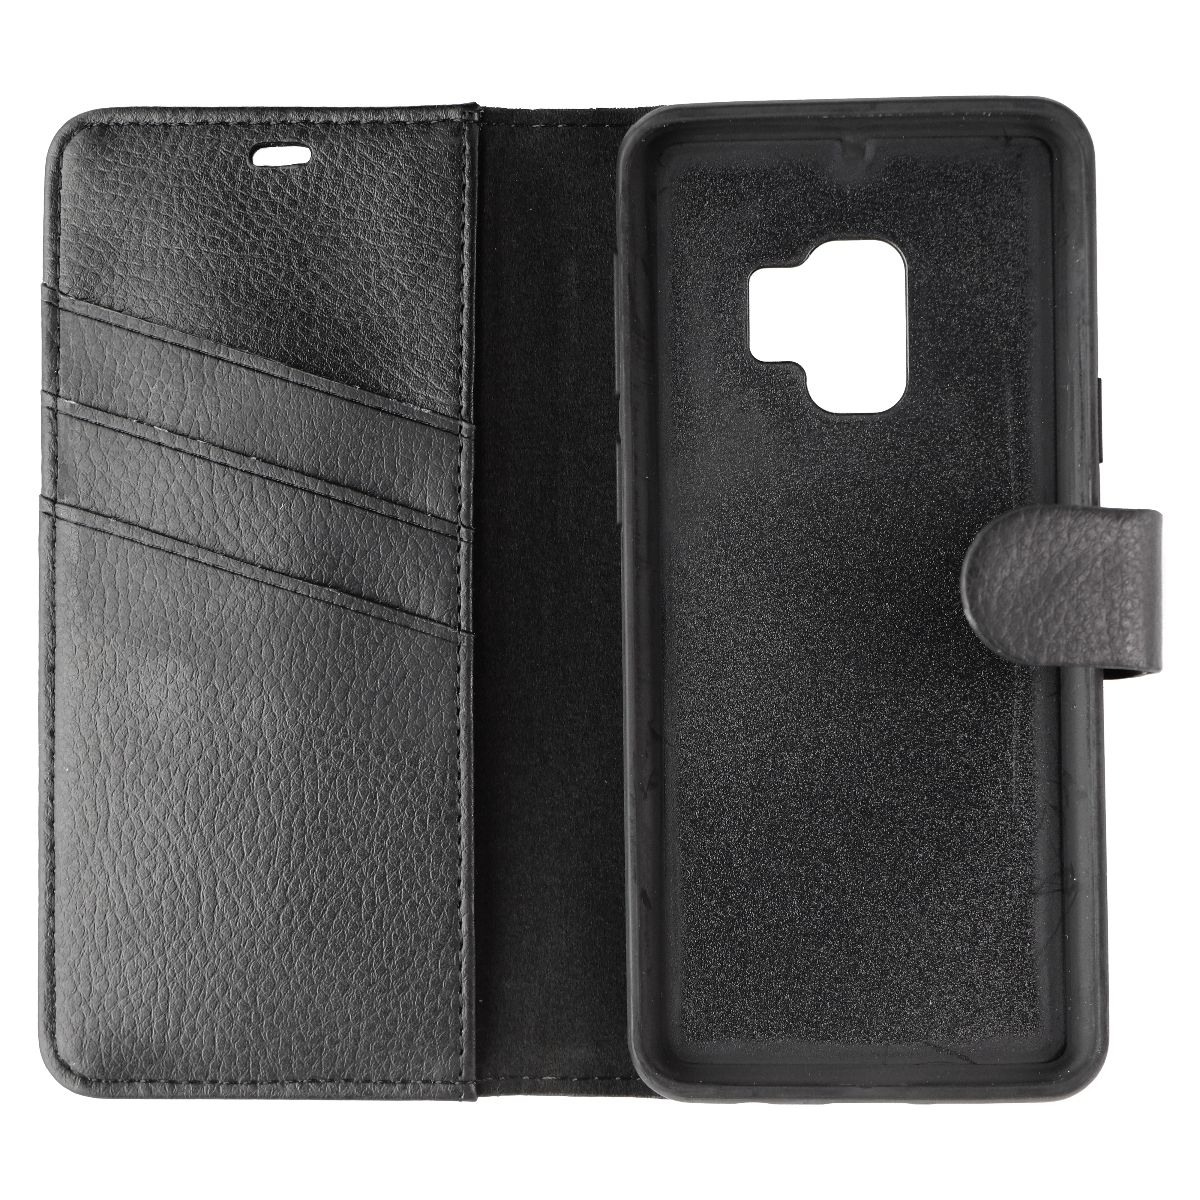 Strongnfree Moderna Plus 2-in-1 Folio Wallet Case For Galaxy S9 - Black (Refurbished)